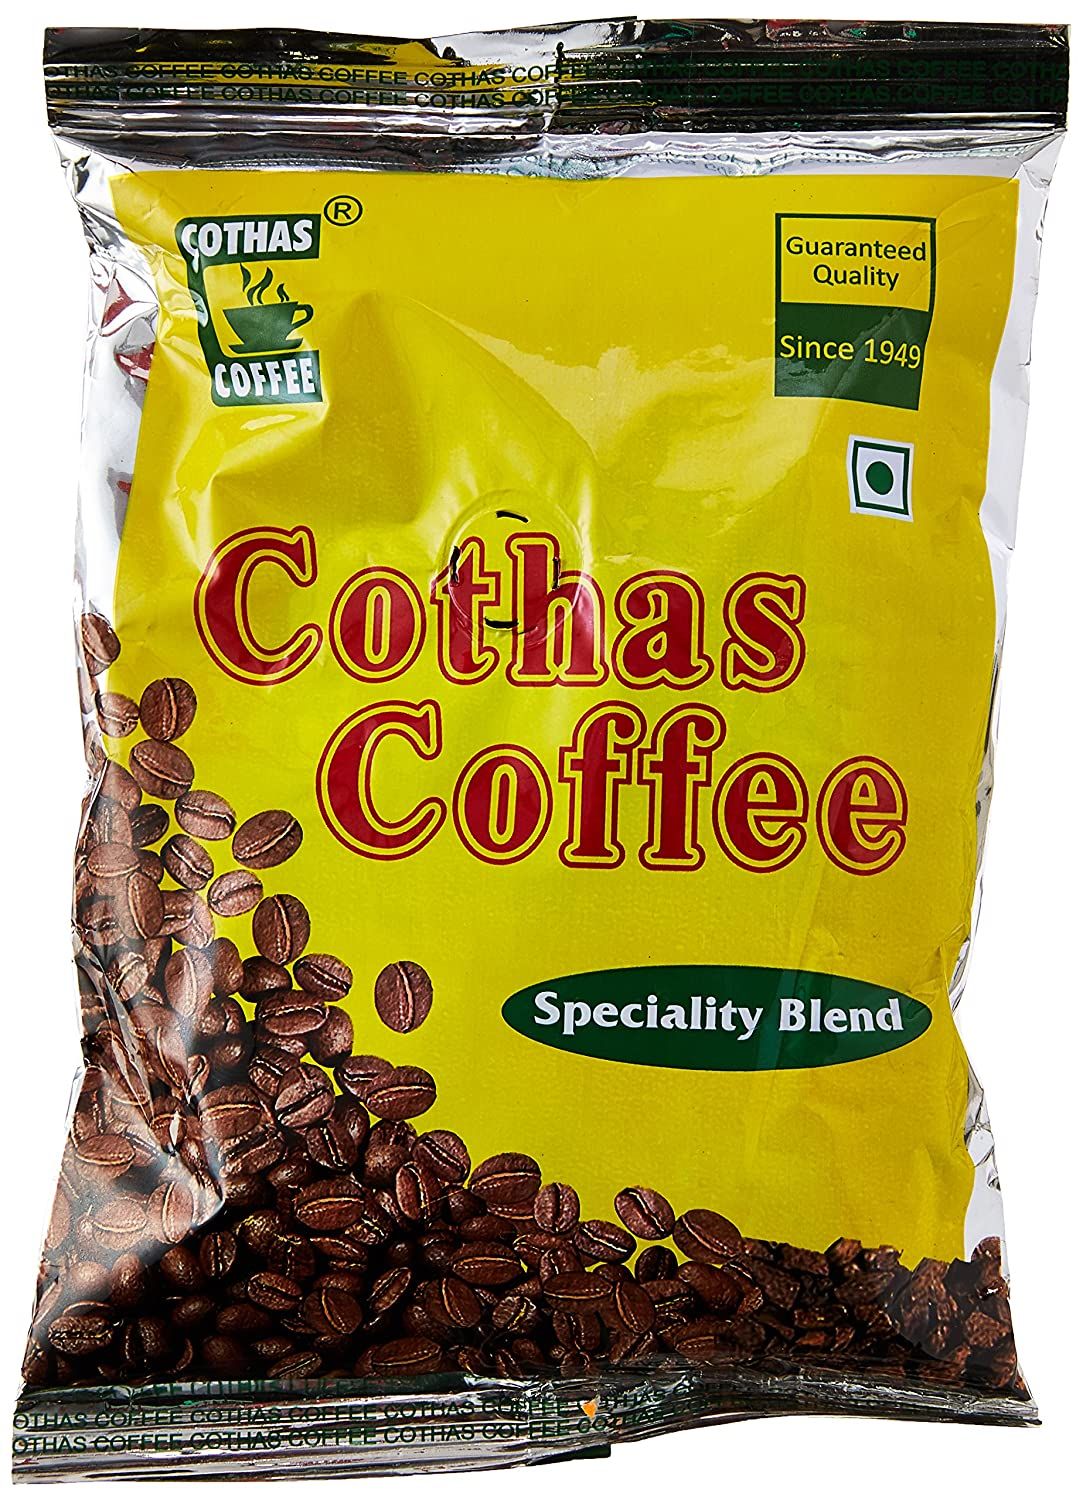 Cothas Coffee Powder Image